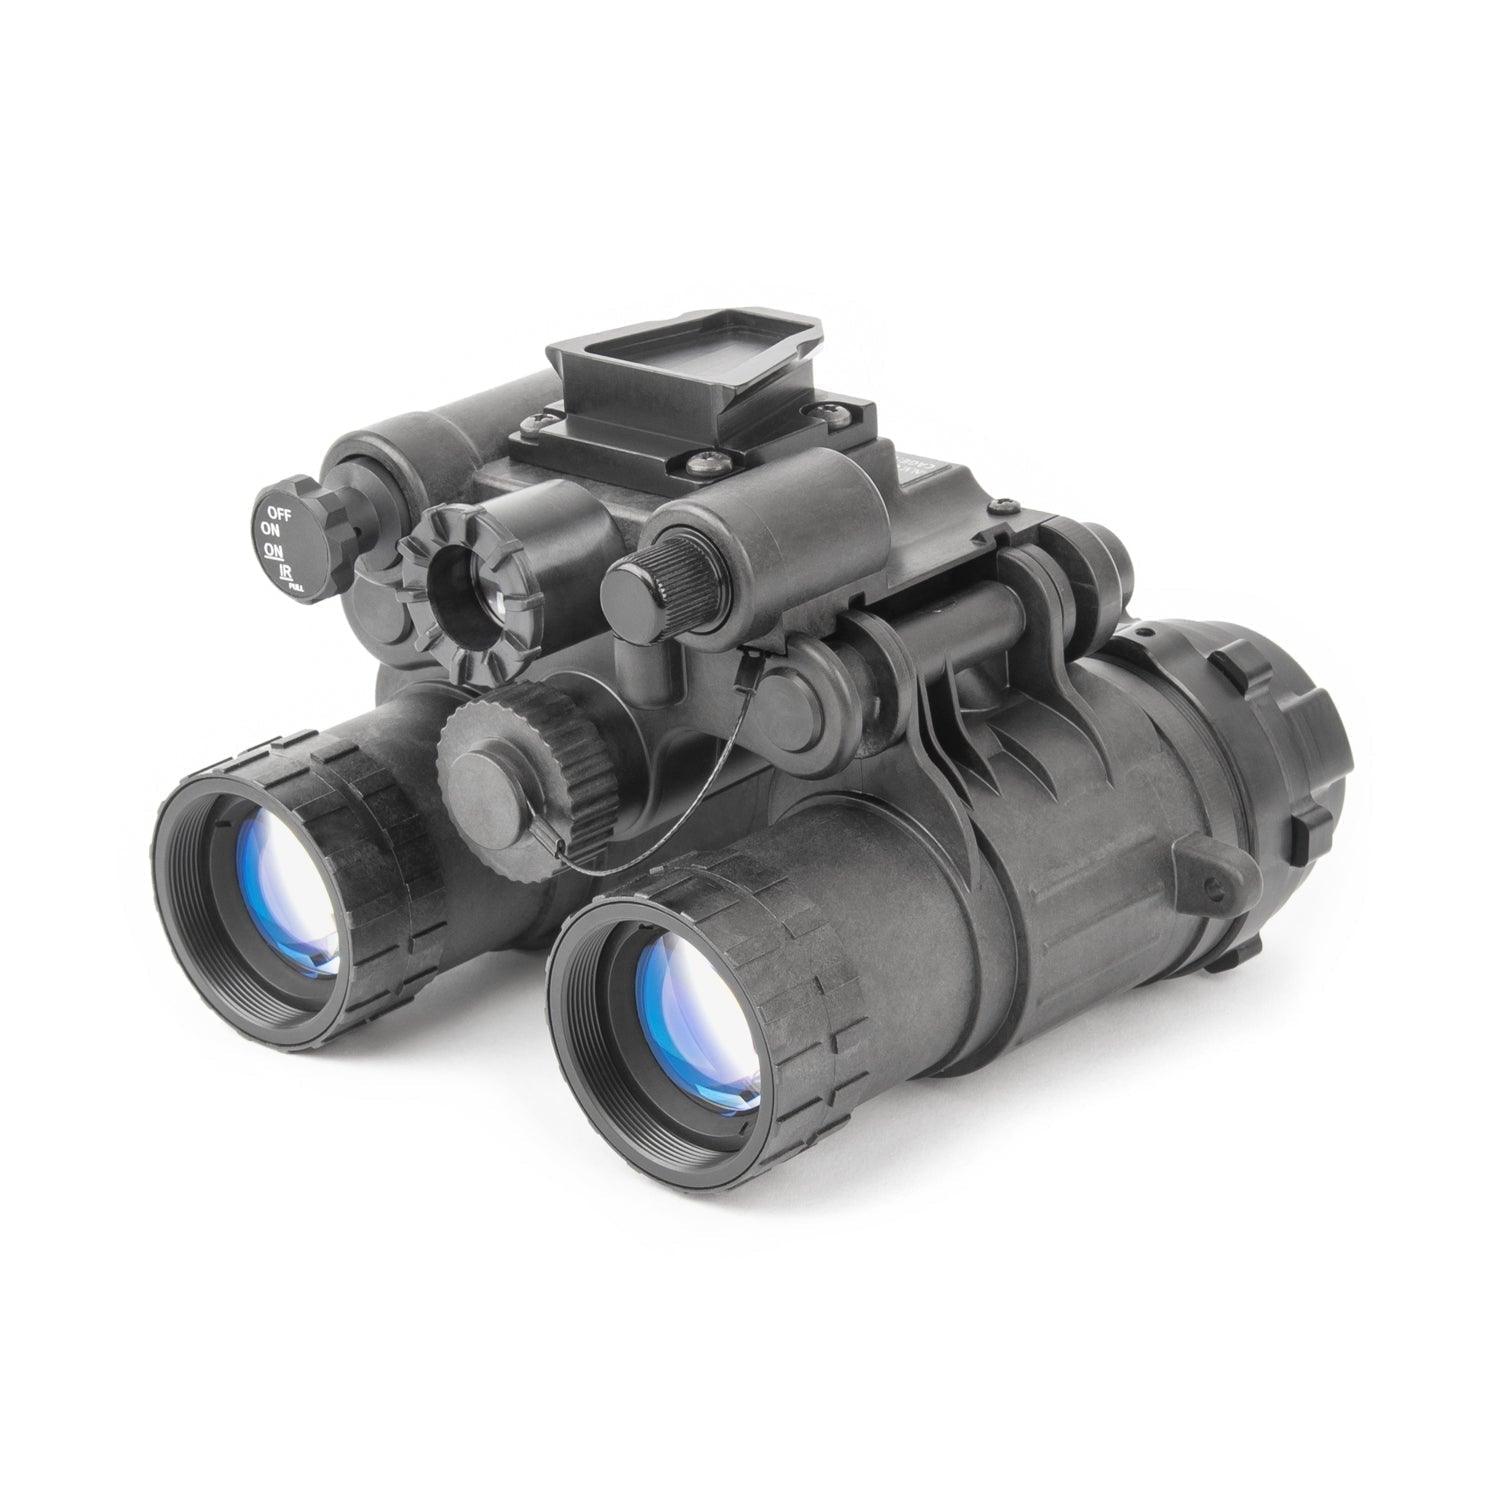 NVD BNVD-SG Gen 3 Night Vision Binocular White Phosphor L3/Harris Unfilmed, Min FOM 1800 - NVU